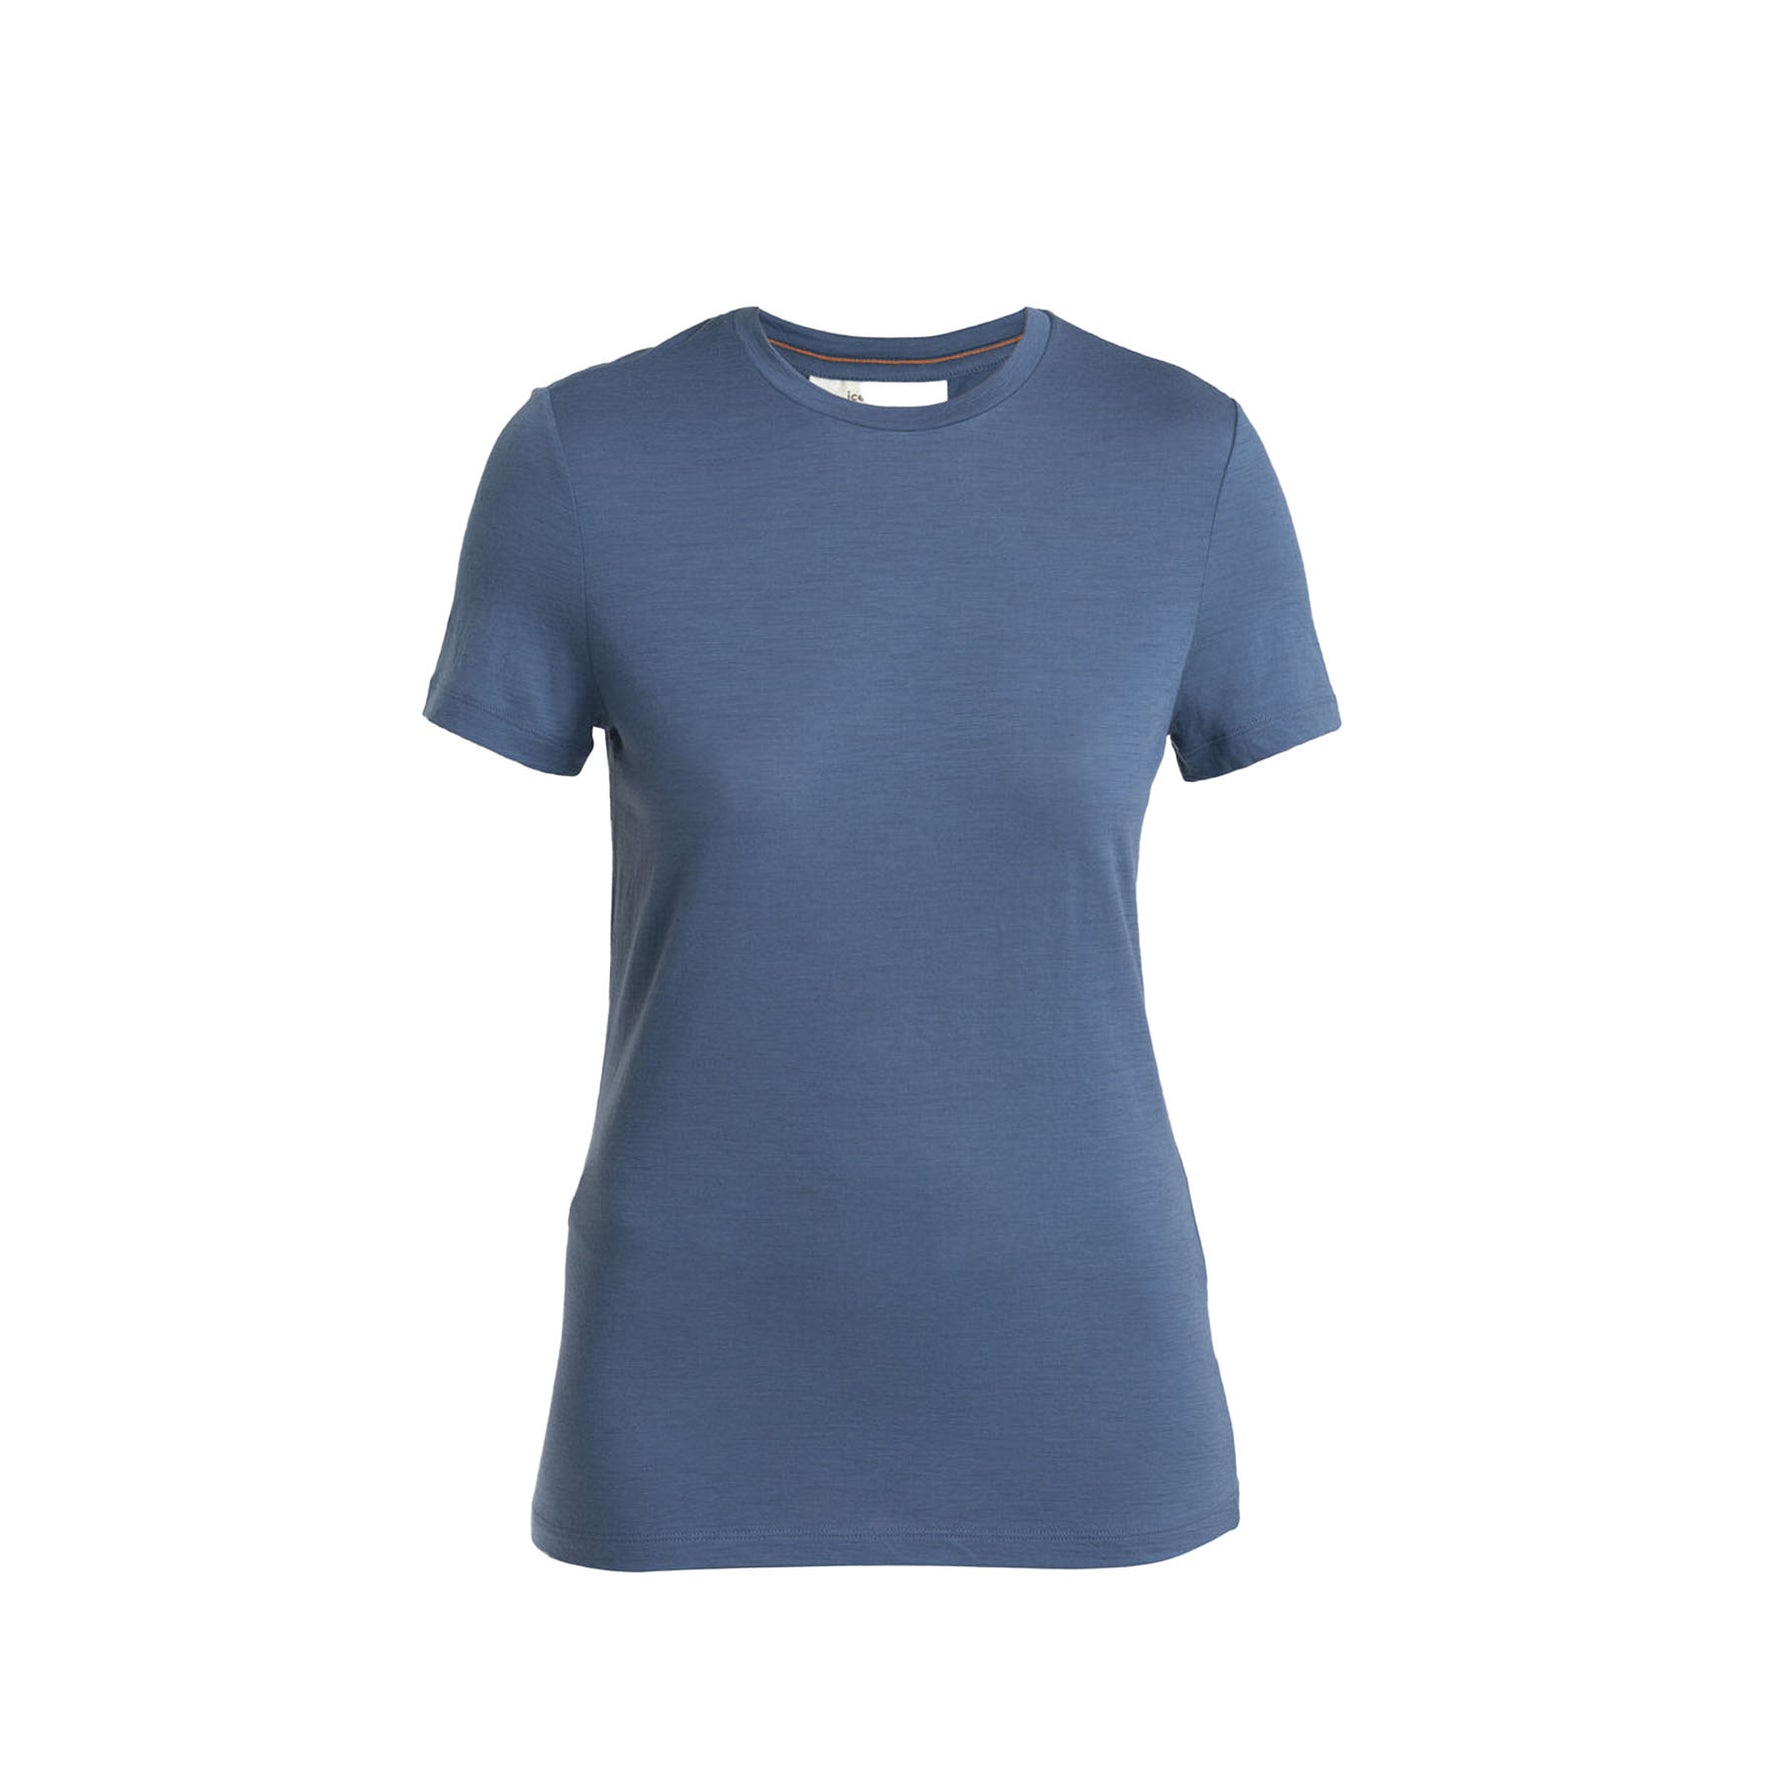 Icebreaker Women's Merino 150 Tech Lite III Technical T-shirt 